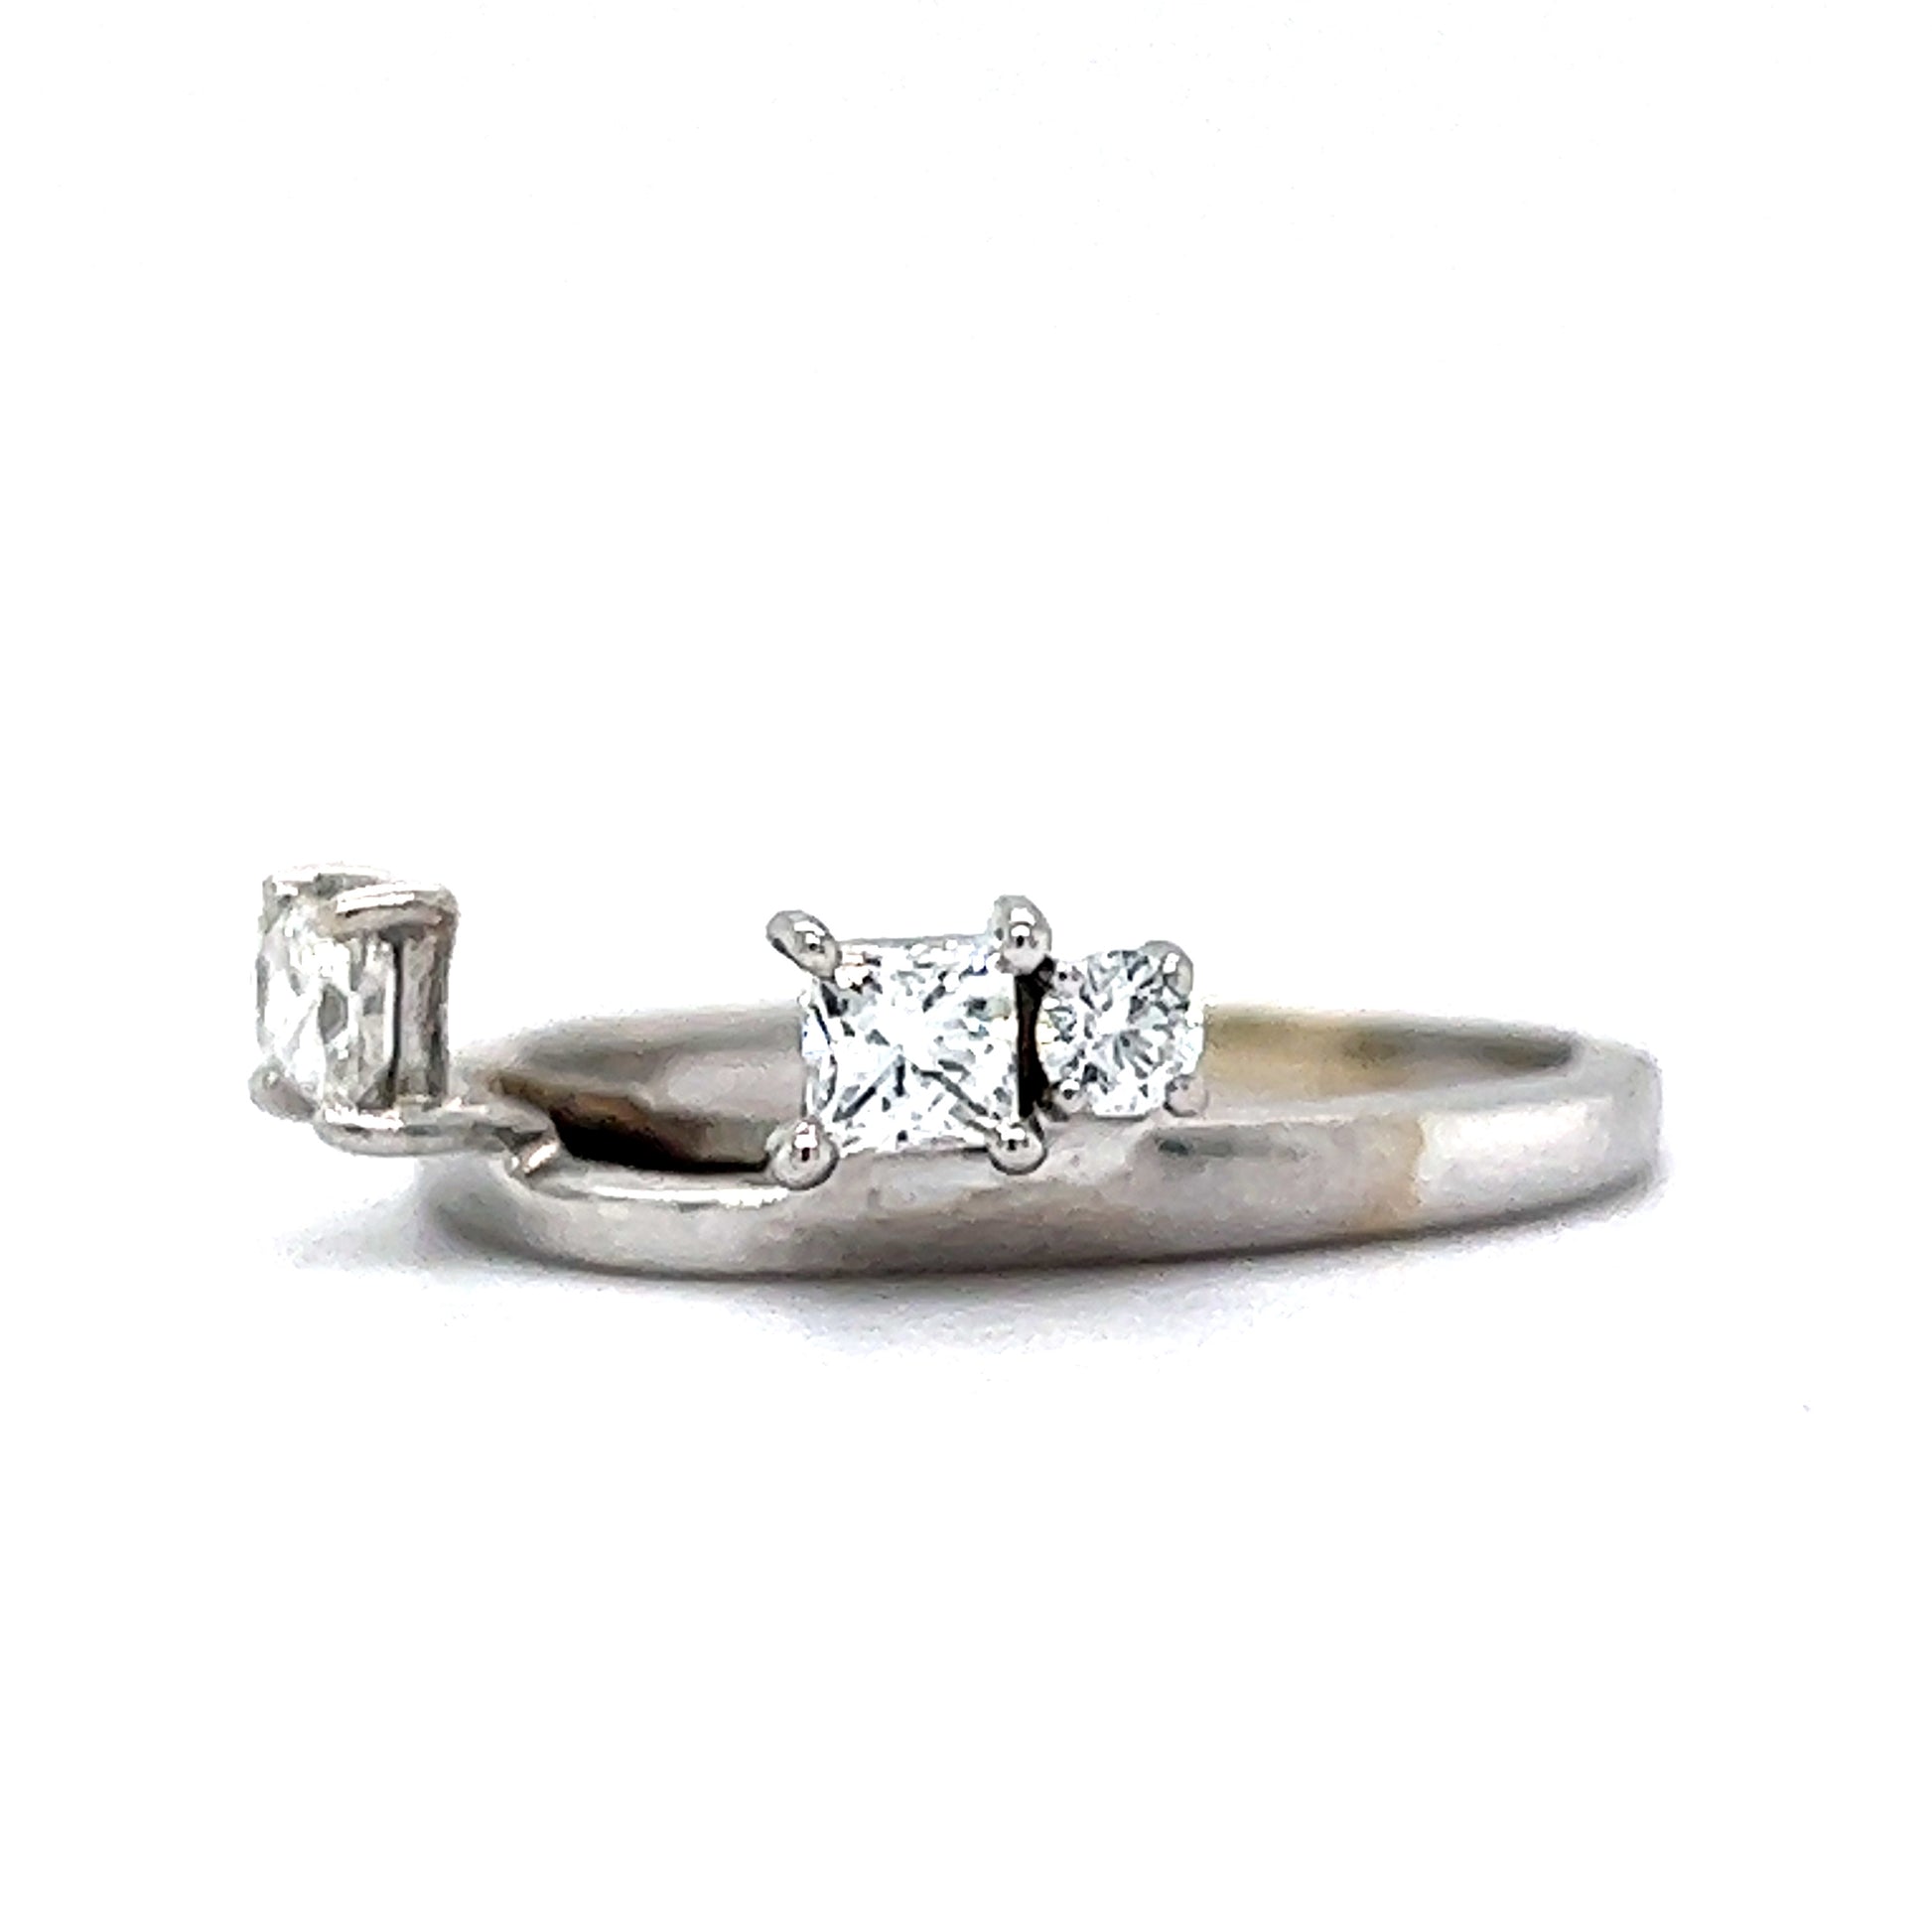 .53 Diamond Ring Enhancer in 14k White GoldComposition: 14 Karat White GoldRing Size: 6.75Total Diamond Weight: .53 ctTotal Gram Weight: 2.9 gInscription: .53 14K LSC-09